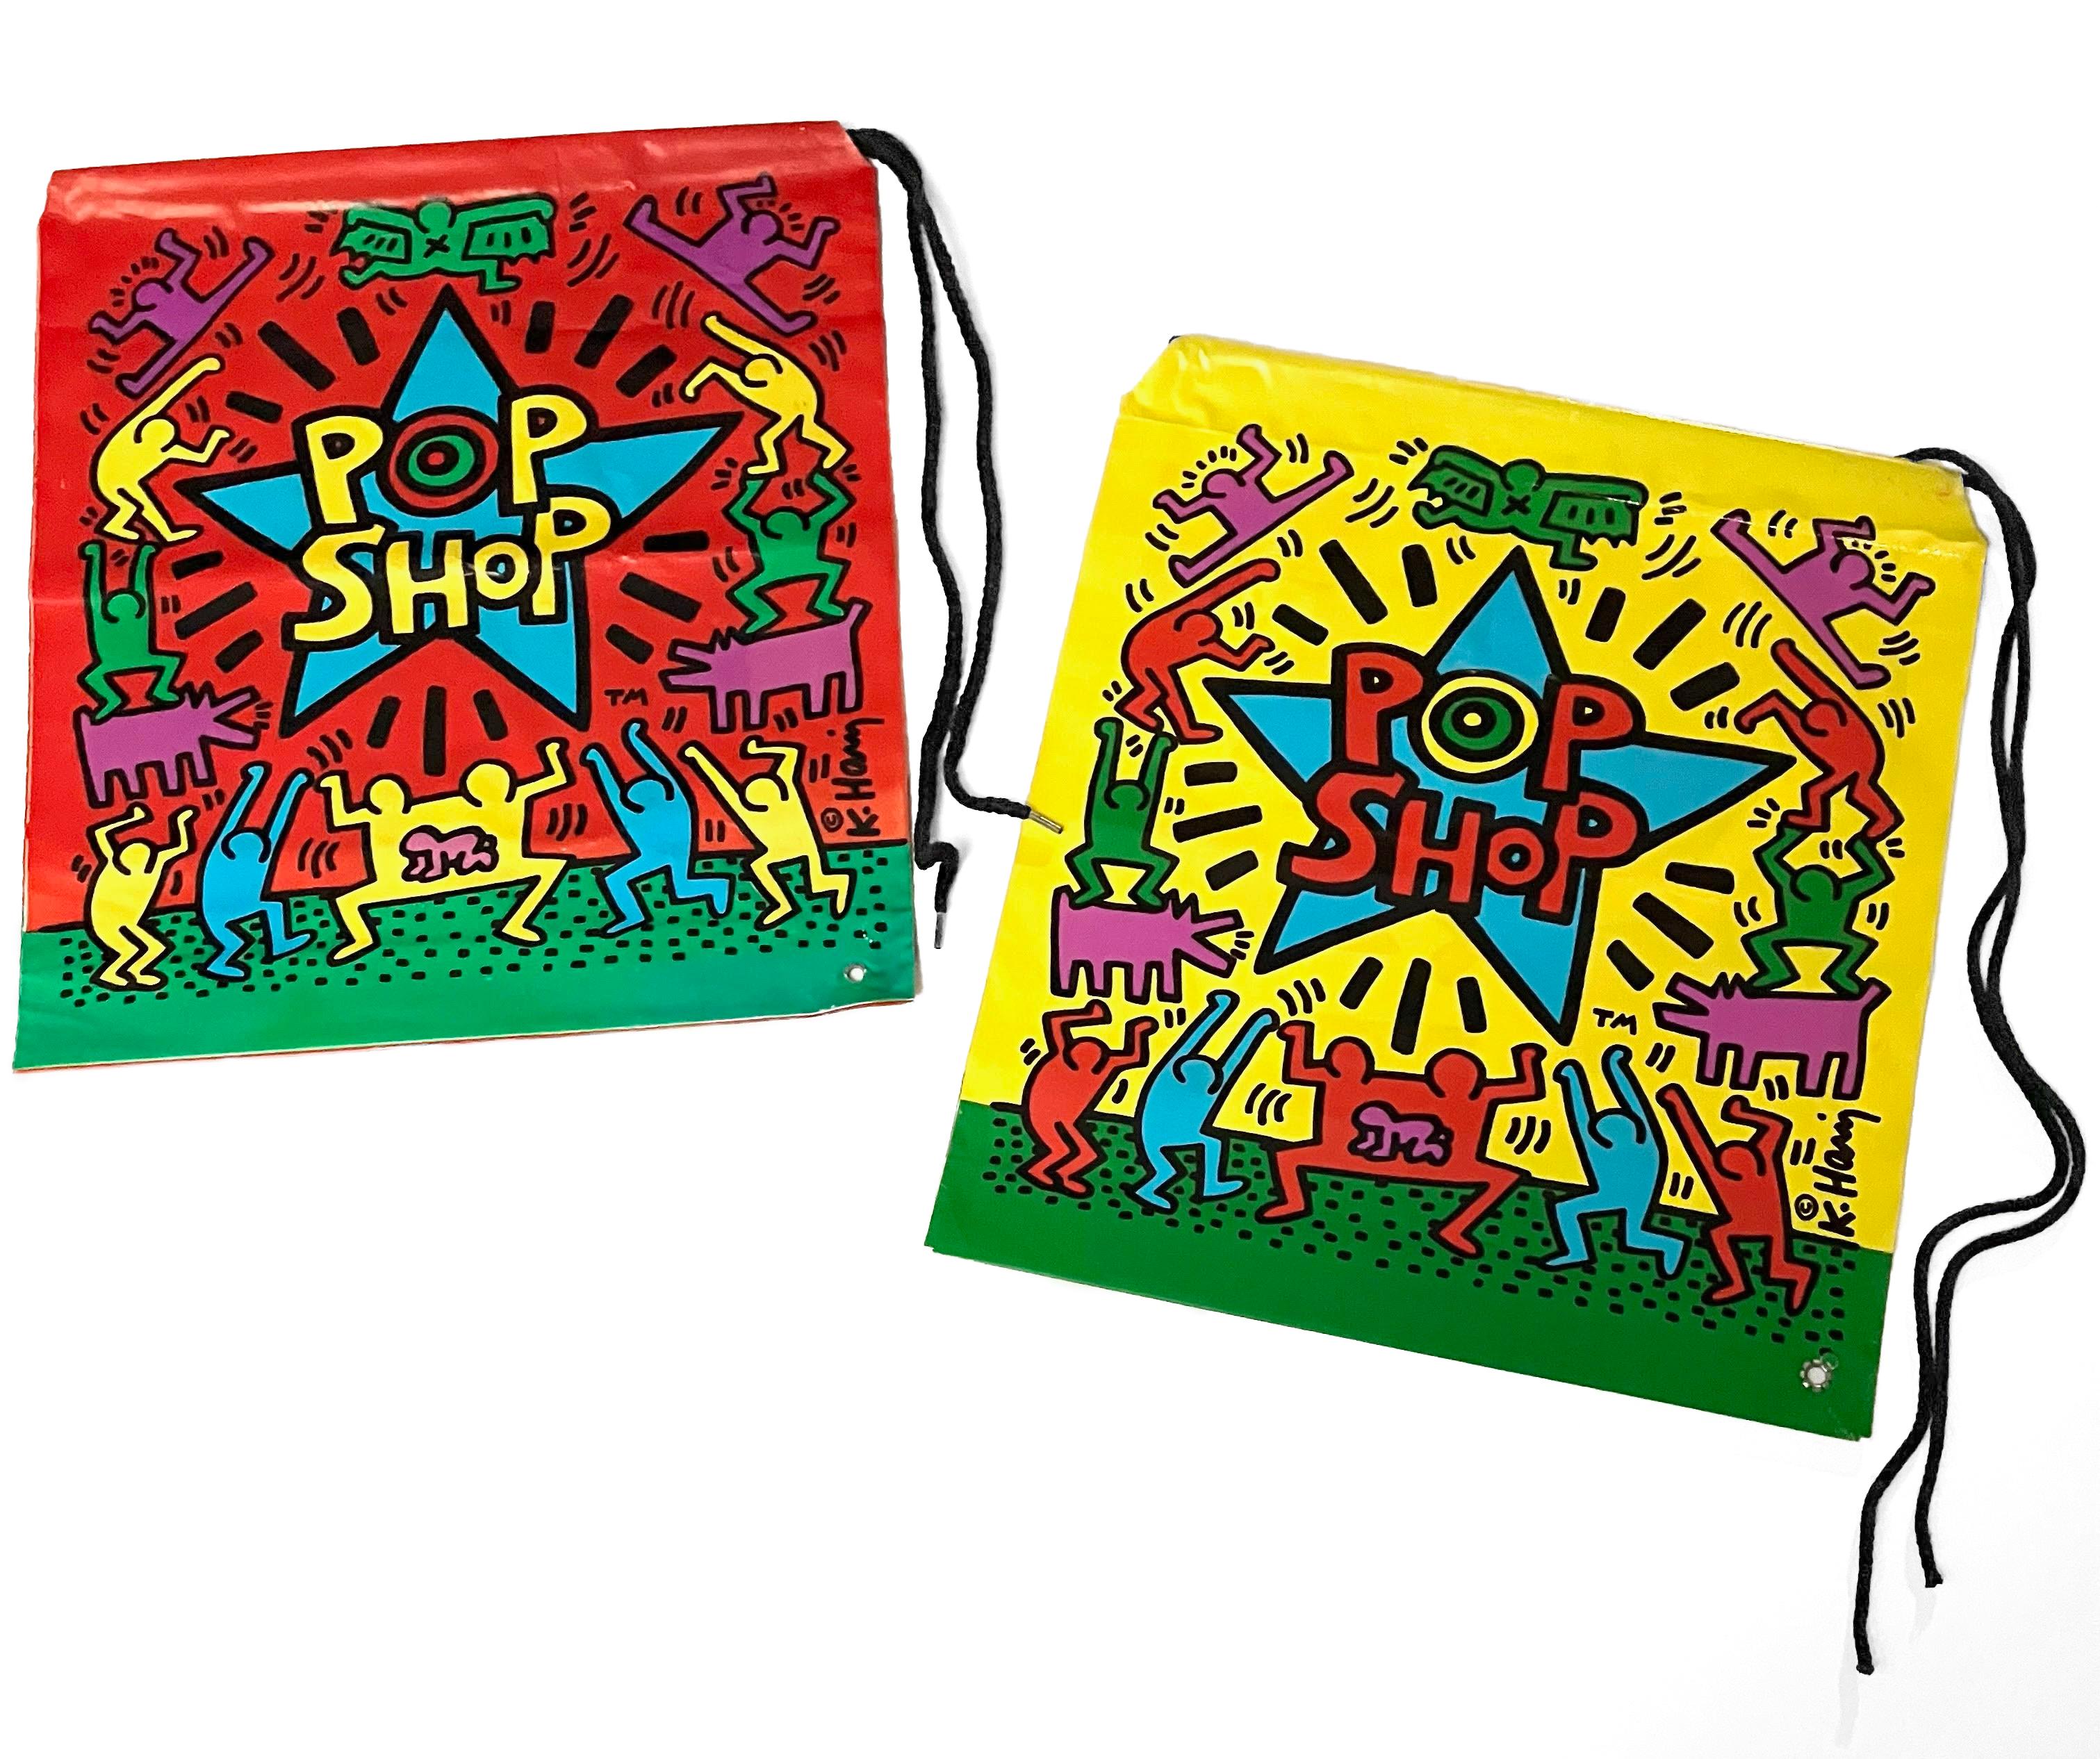 Keith Haring Pop Shop bags set of 2 c.1986 (Keith Haring pop shop) 2